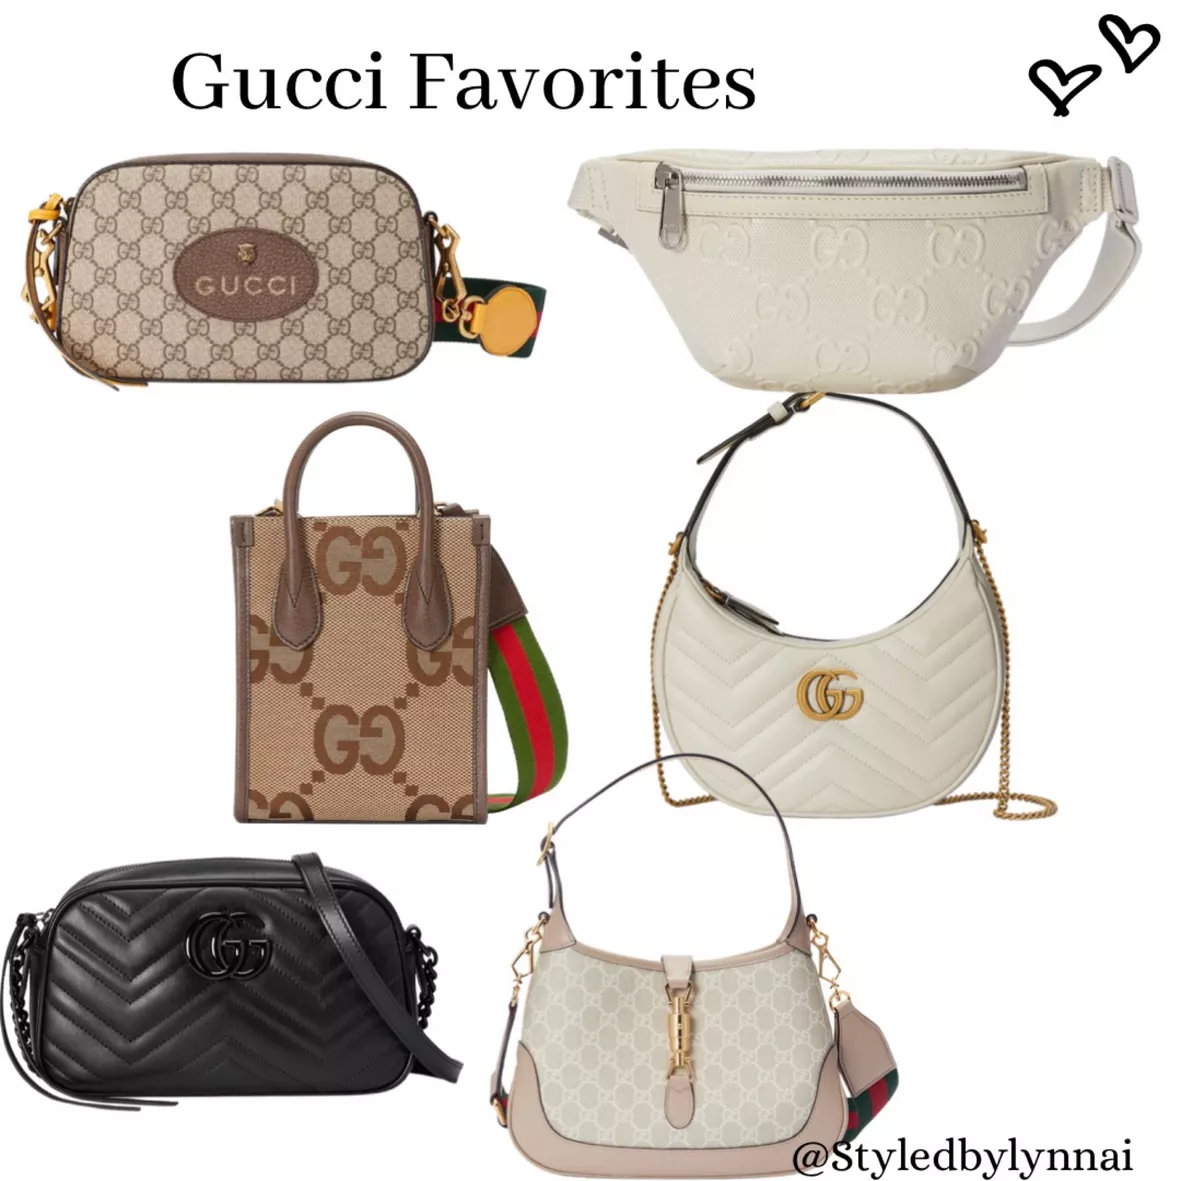 The Gucci Bag: My Favorite Vintage Find